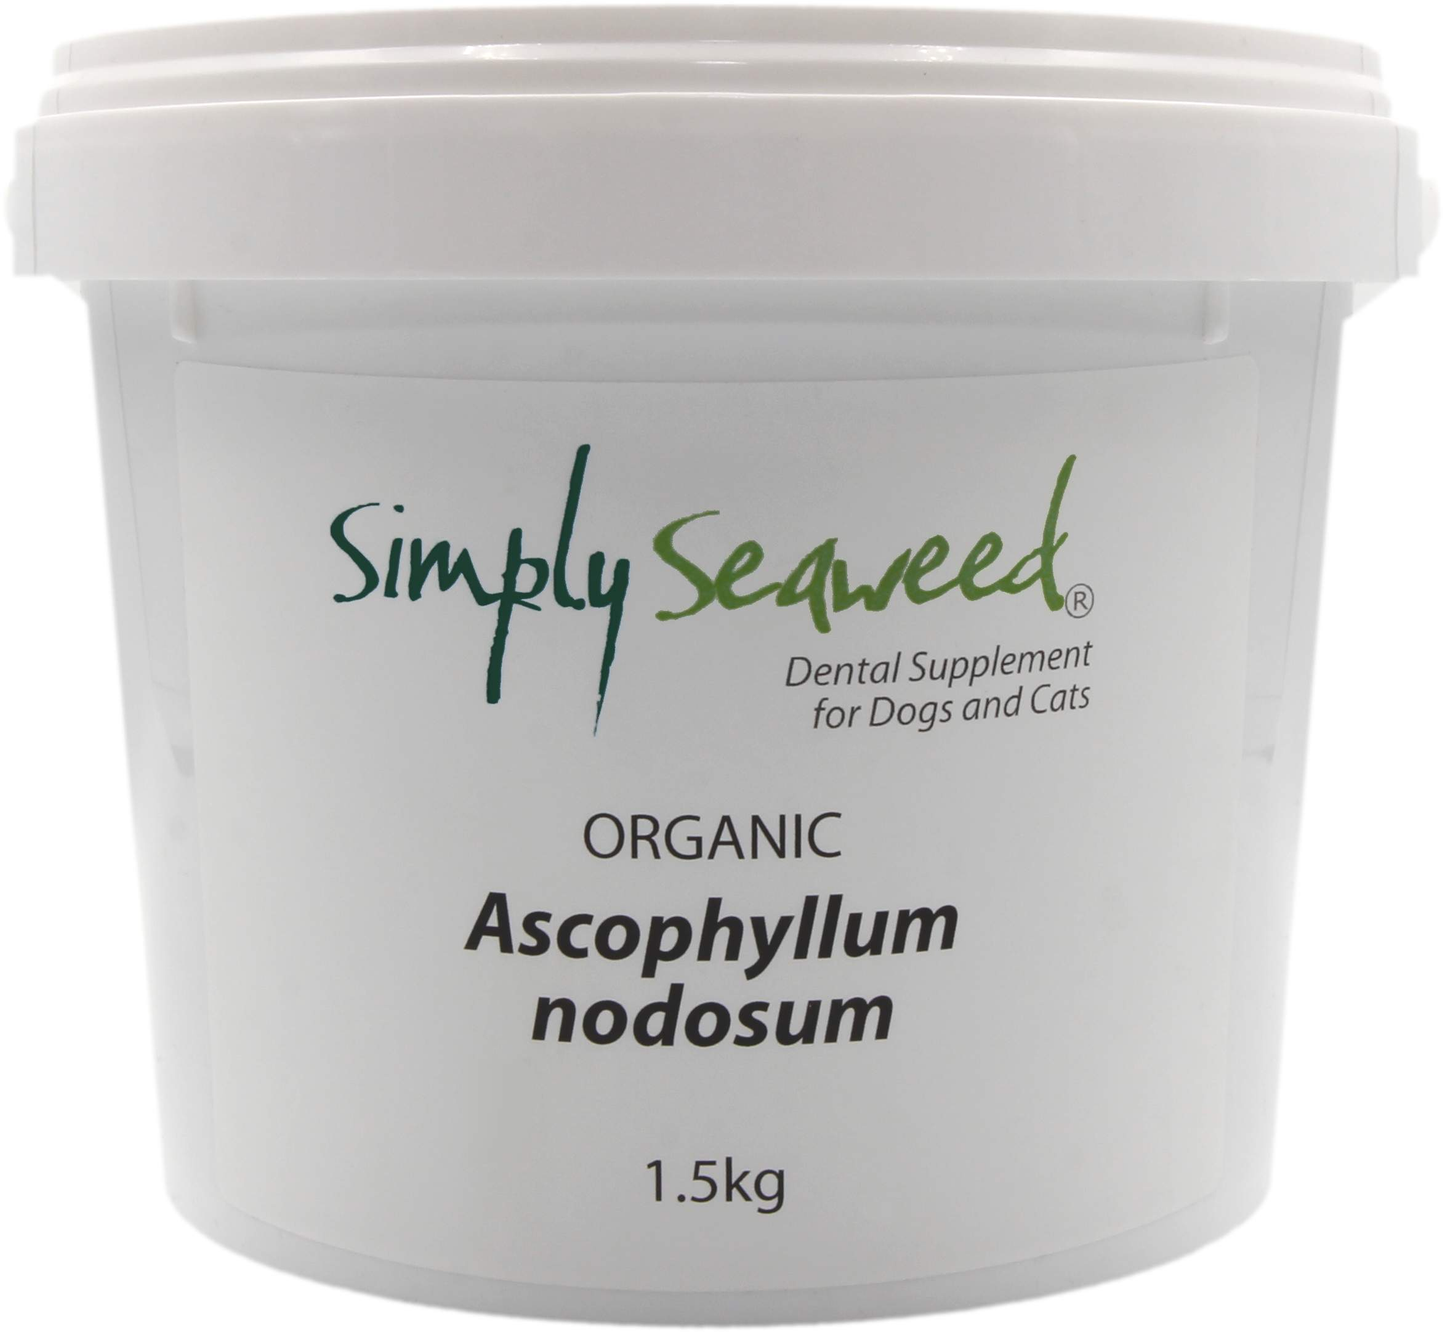 Simply Seaweed - The Saltiest Dog 